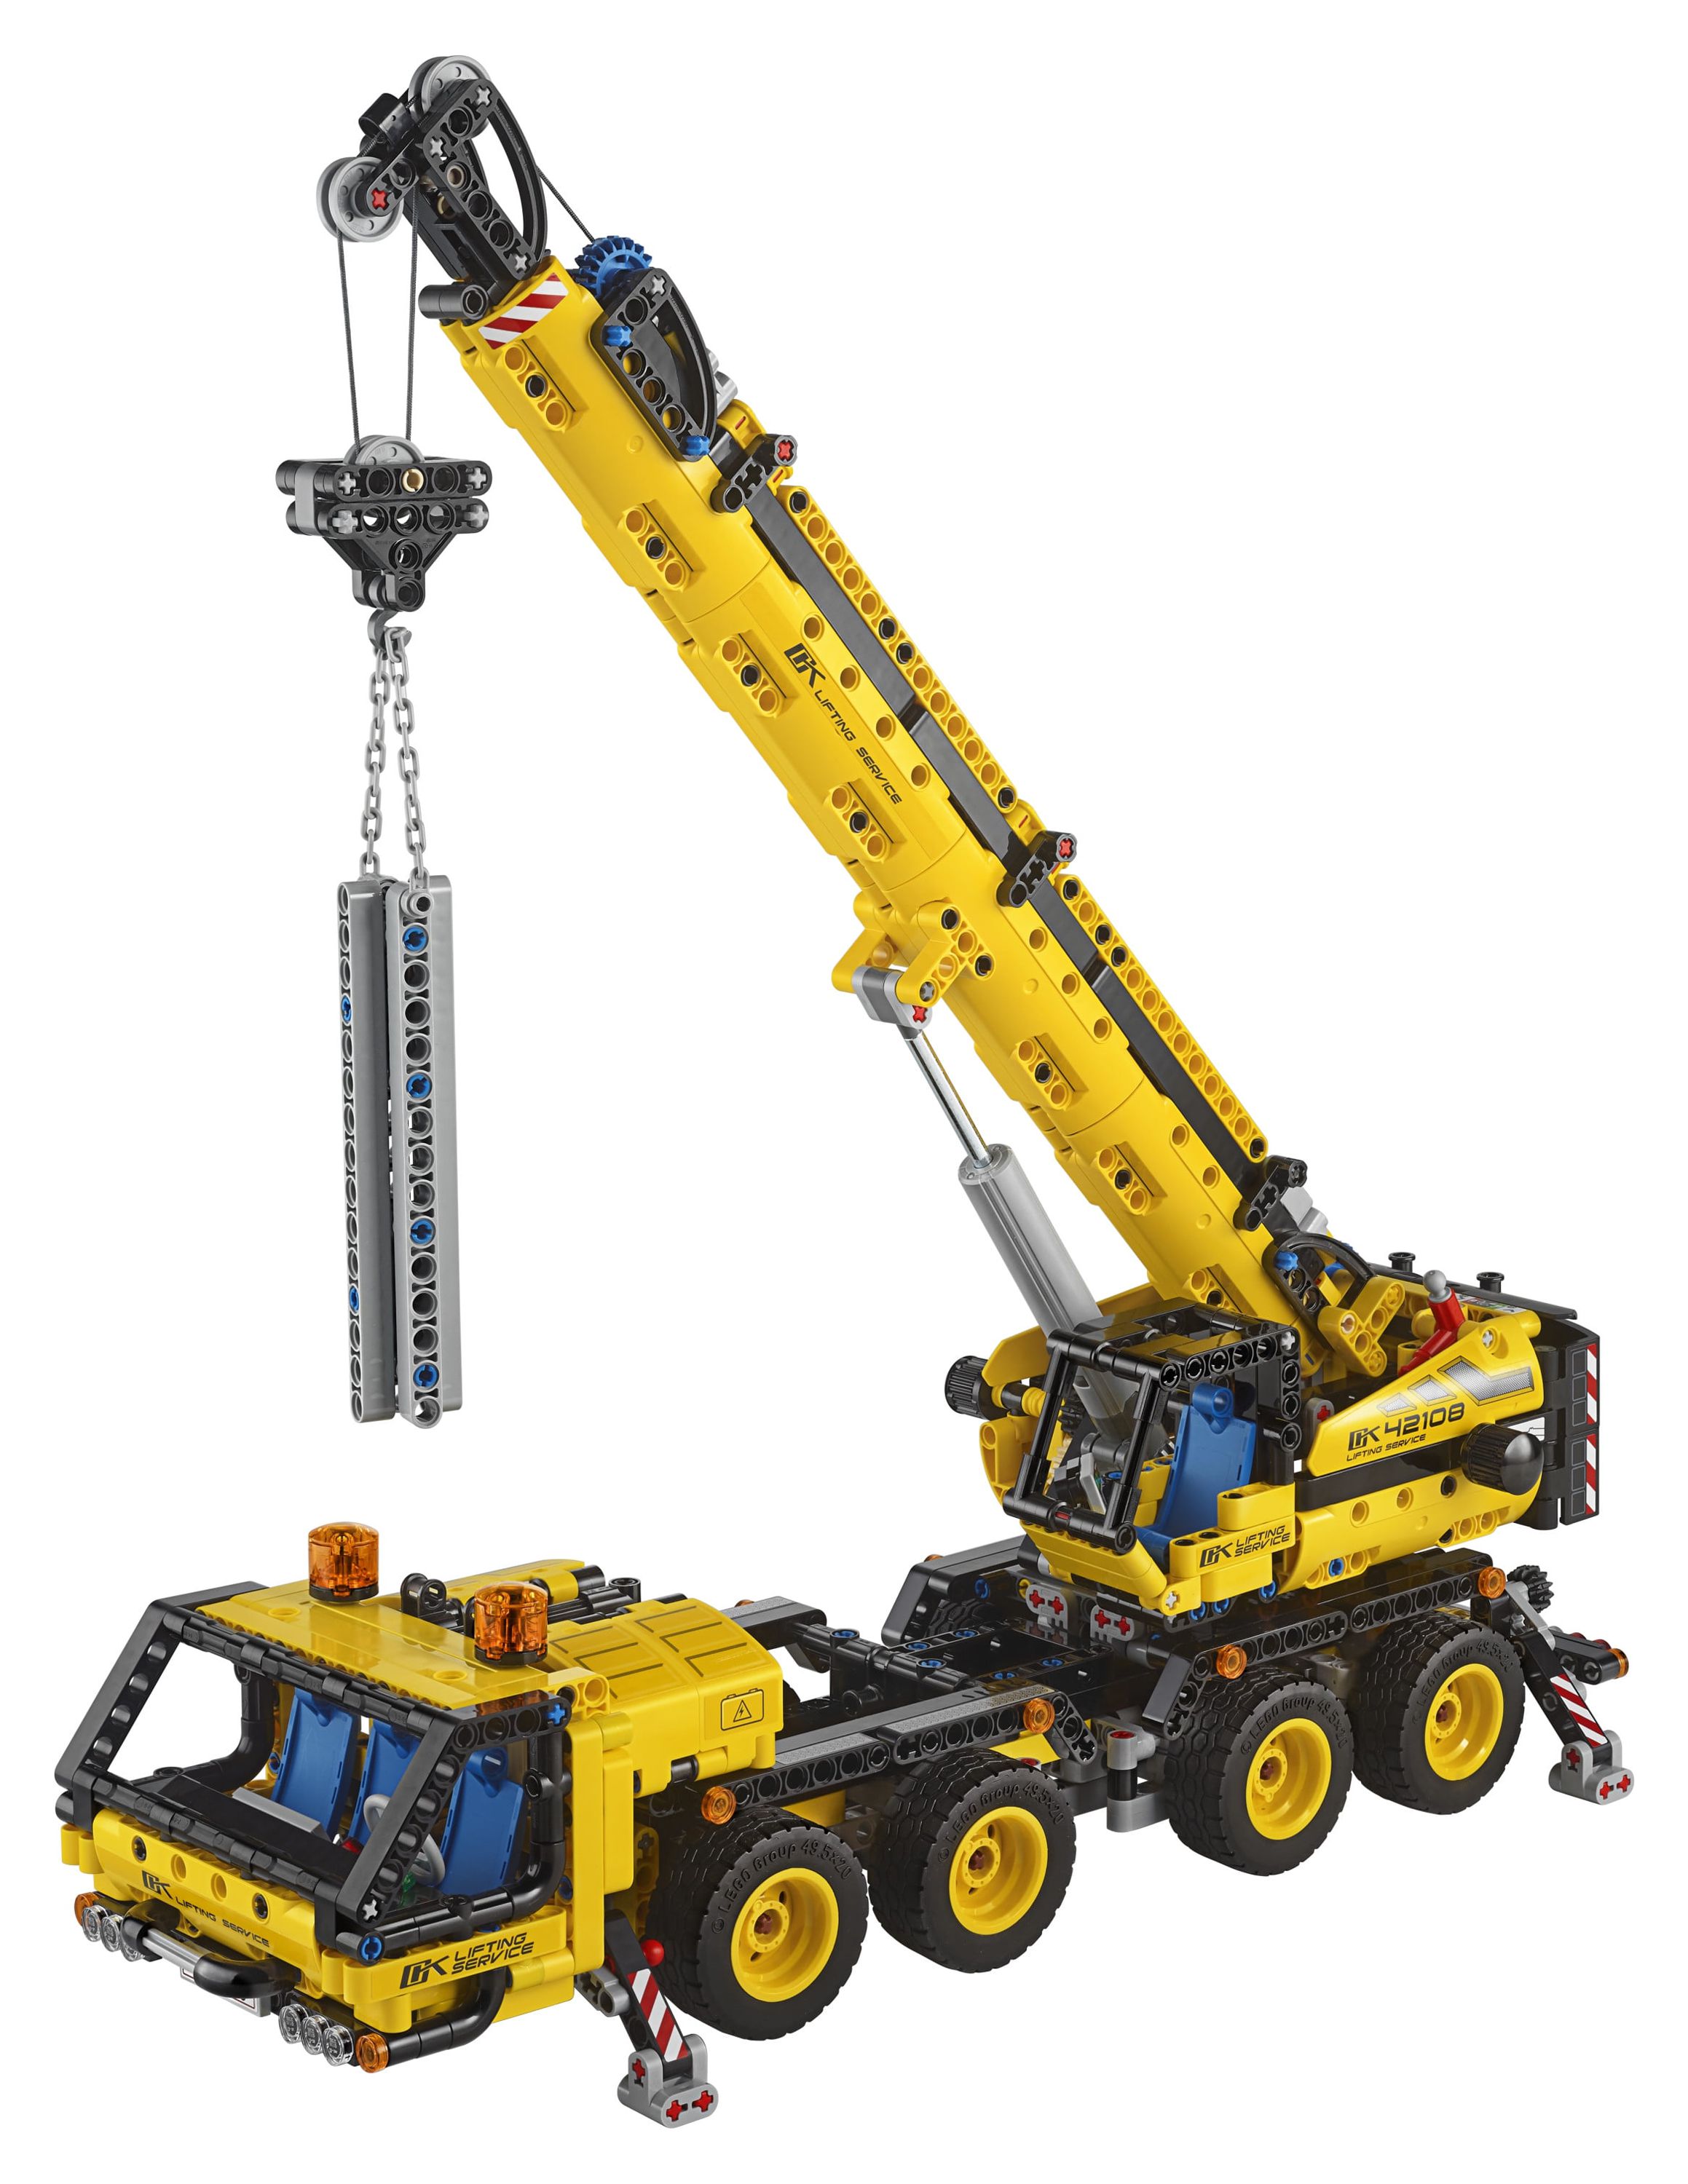 LEGO Technic Mobile Crane 42108 Construction Toy Building Kit (1,292 pieces) - image 3 of 10